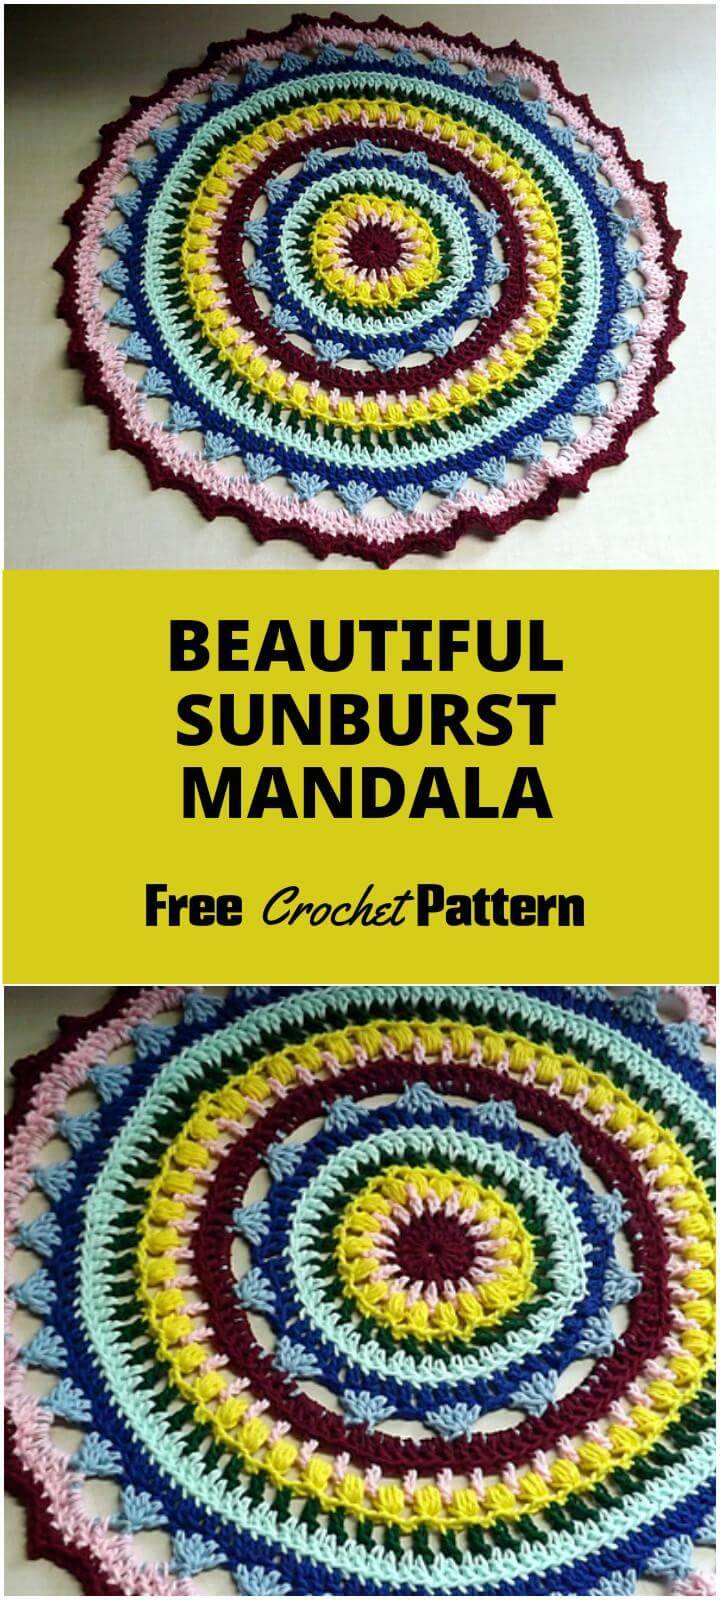 praise-worthy sunburst crochet mandala